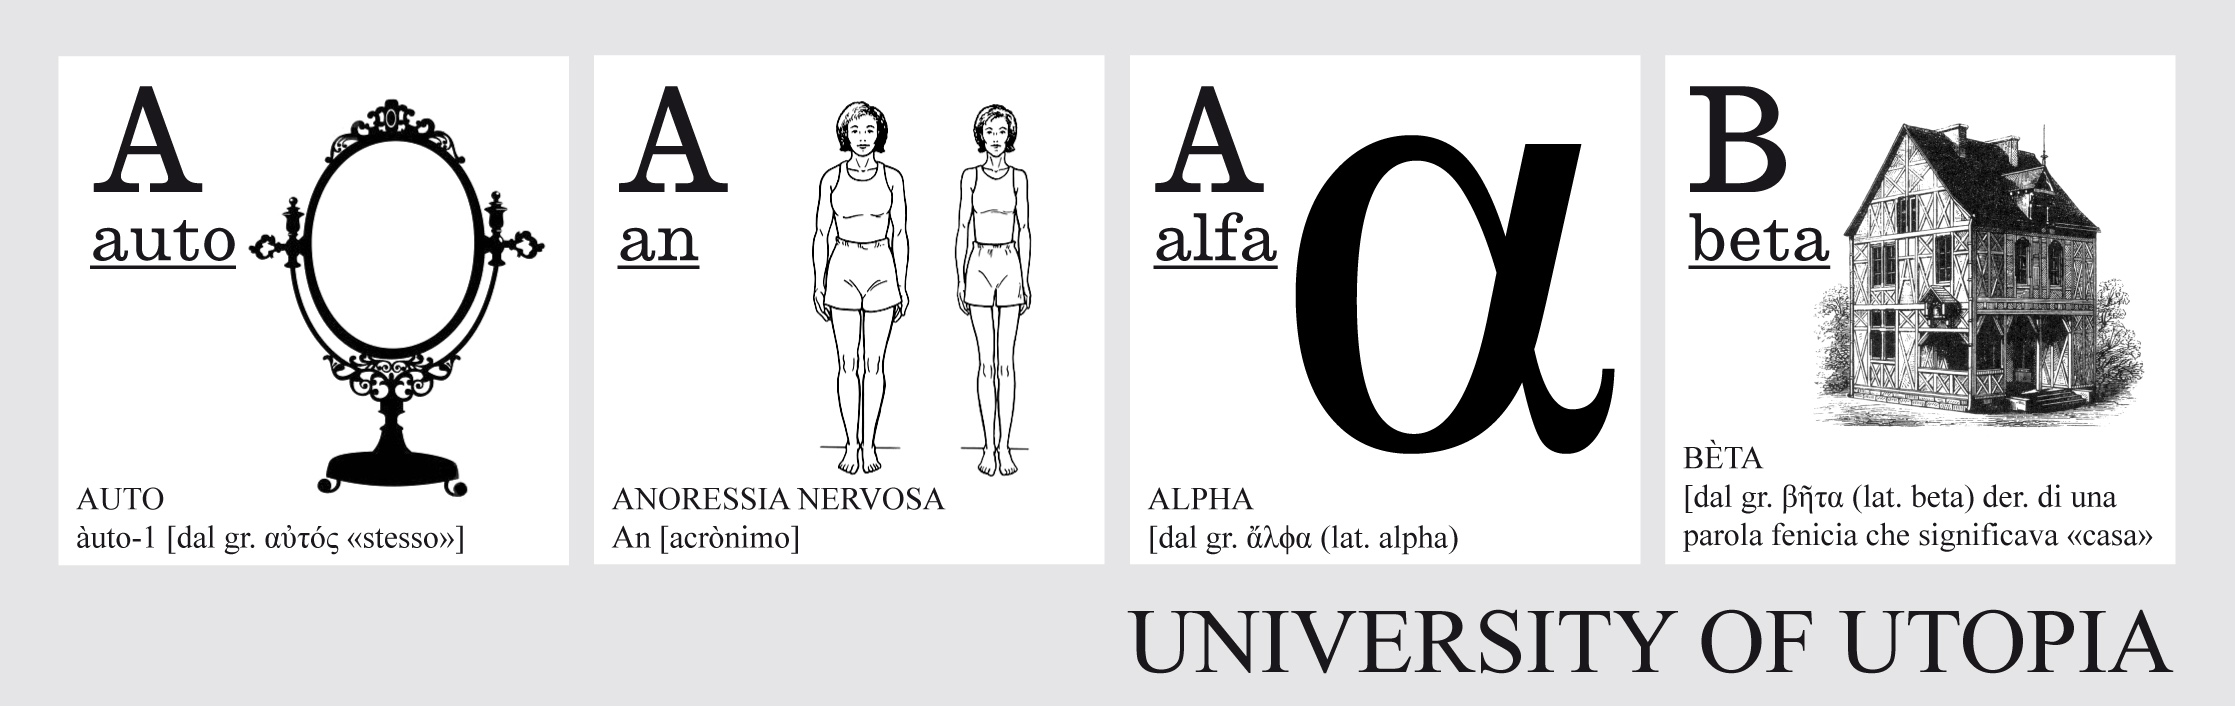 01. Autoanalfabeta University of Utopia